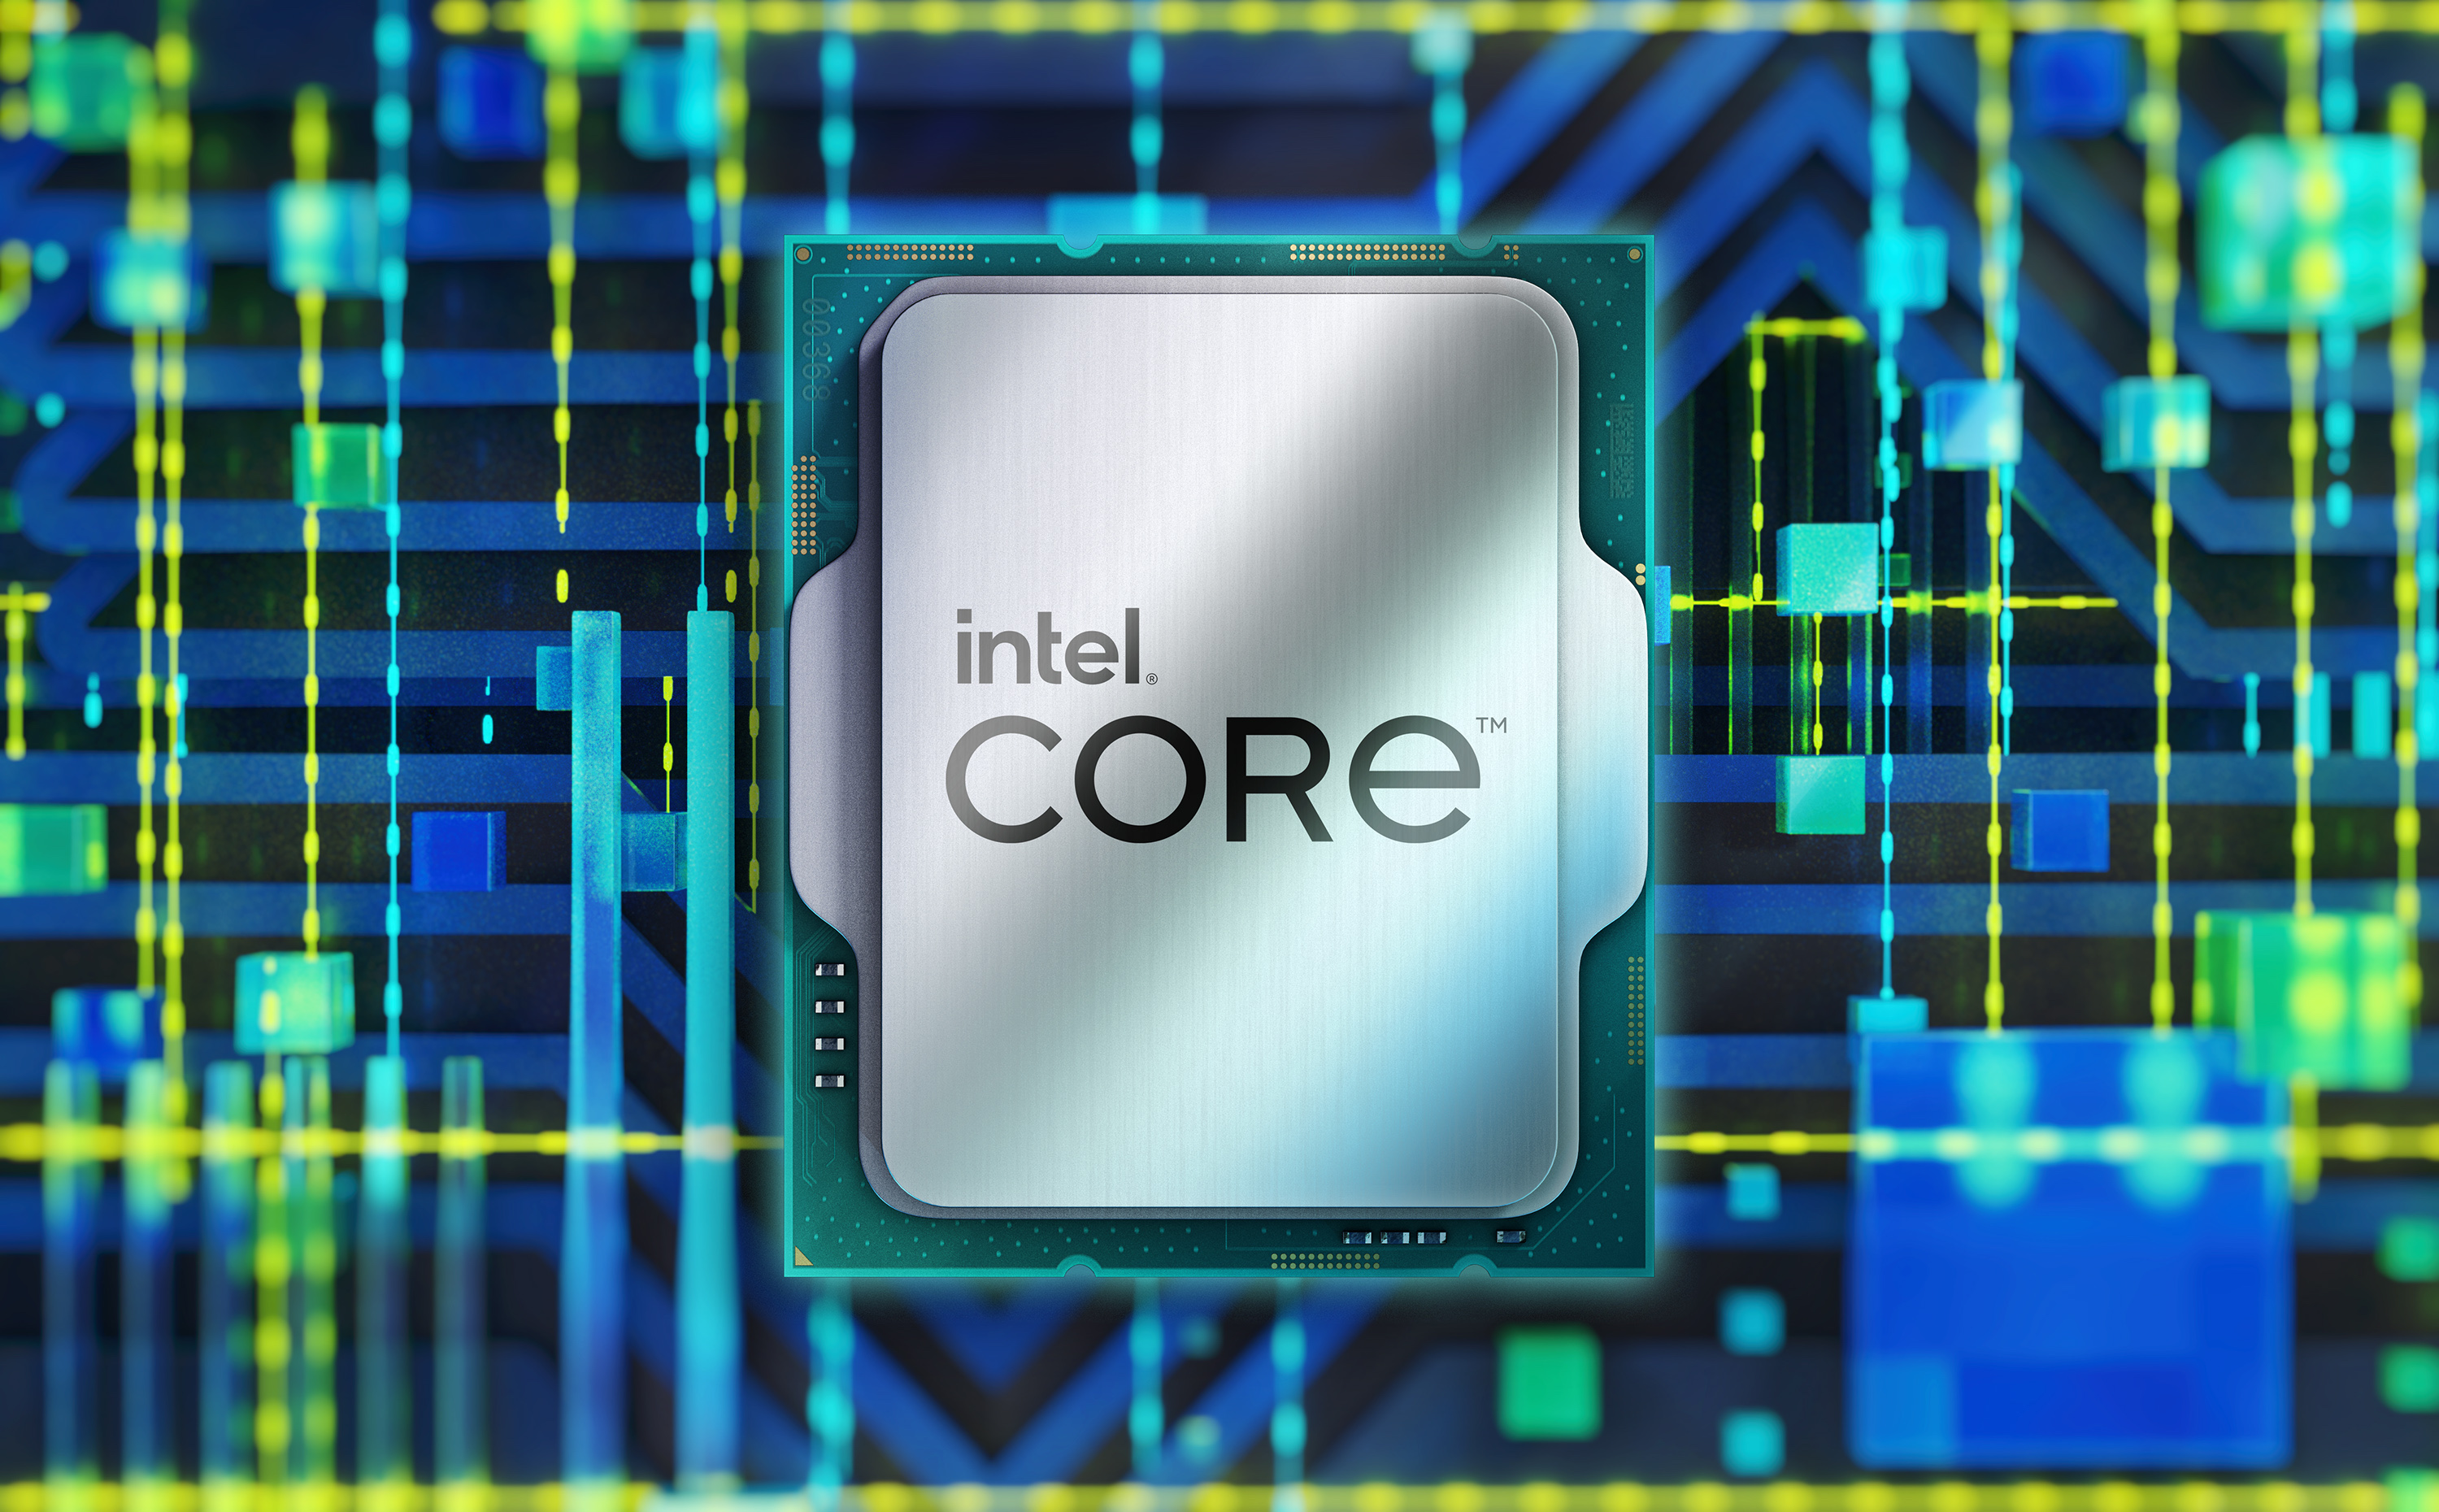 Procesor Intel Core i7-12700F je pecilne uren pre zkladn dosky s pticou LGA1700 z radu Intel 600 Series, kedy sa pi 12 jadrami s maximlnym taktom a 4,9 GHz vaka TB 3.0 technolgii.